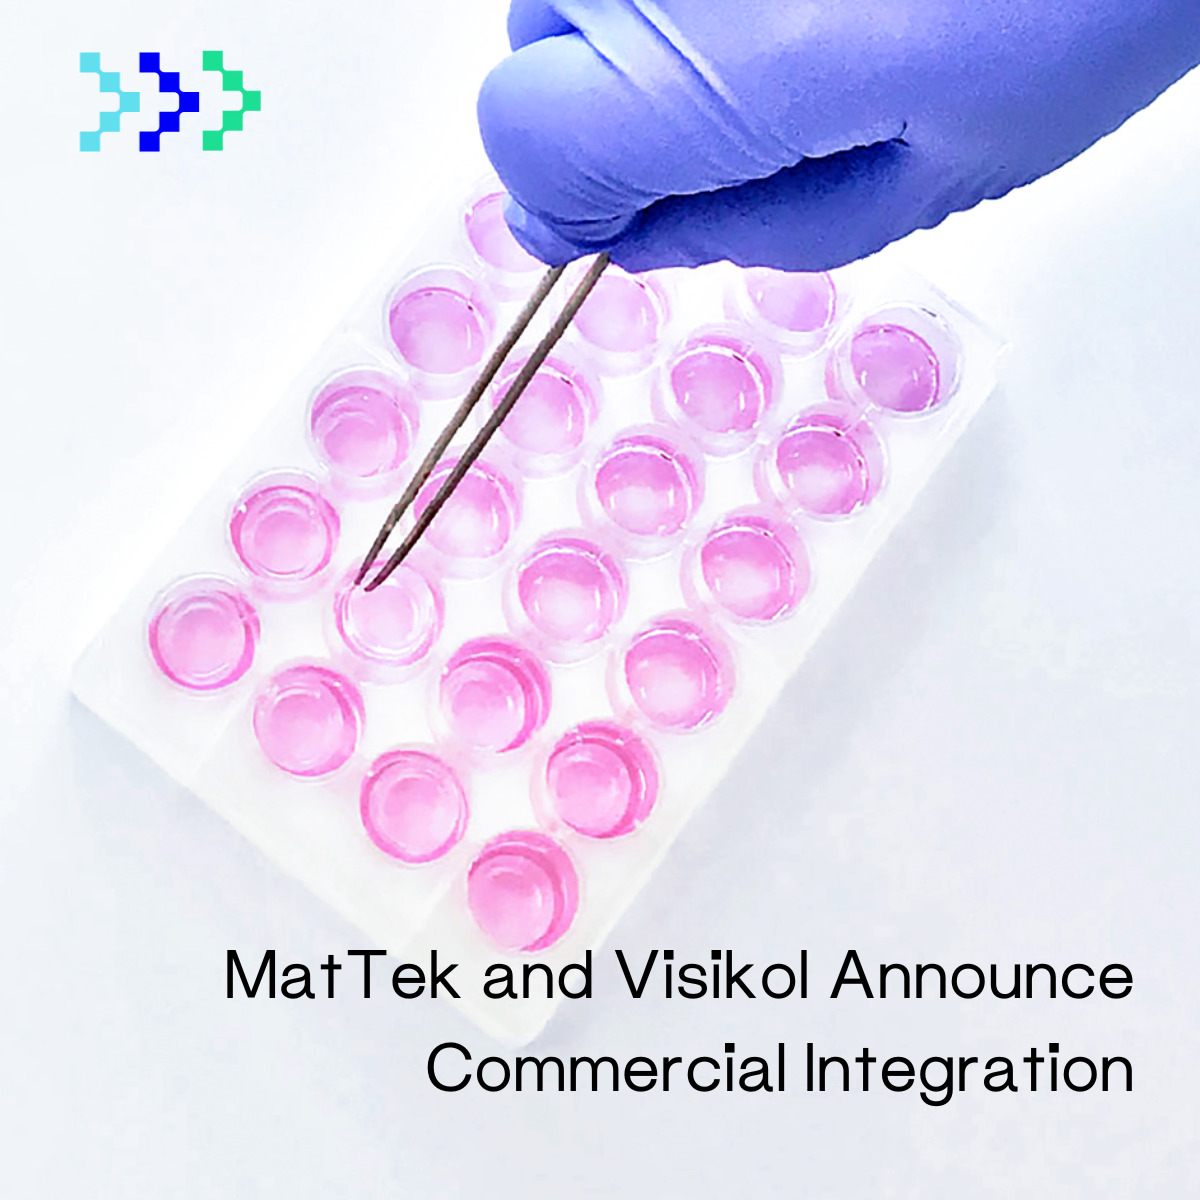 MatTek and Visikol Announce Commercial Integration